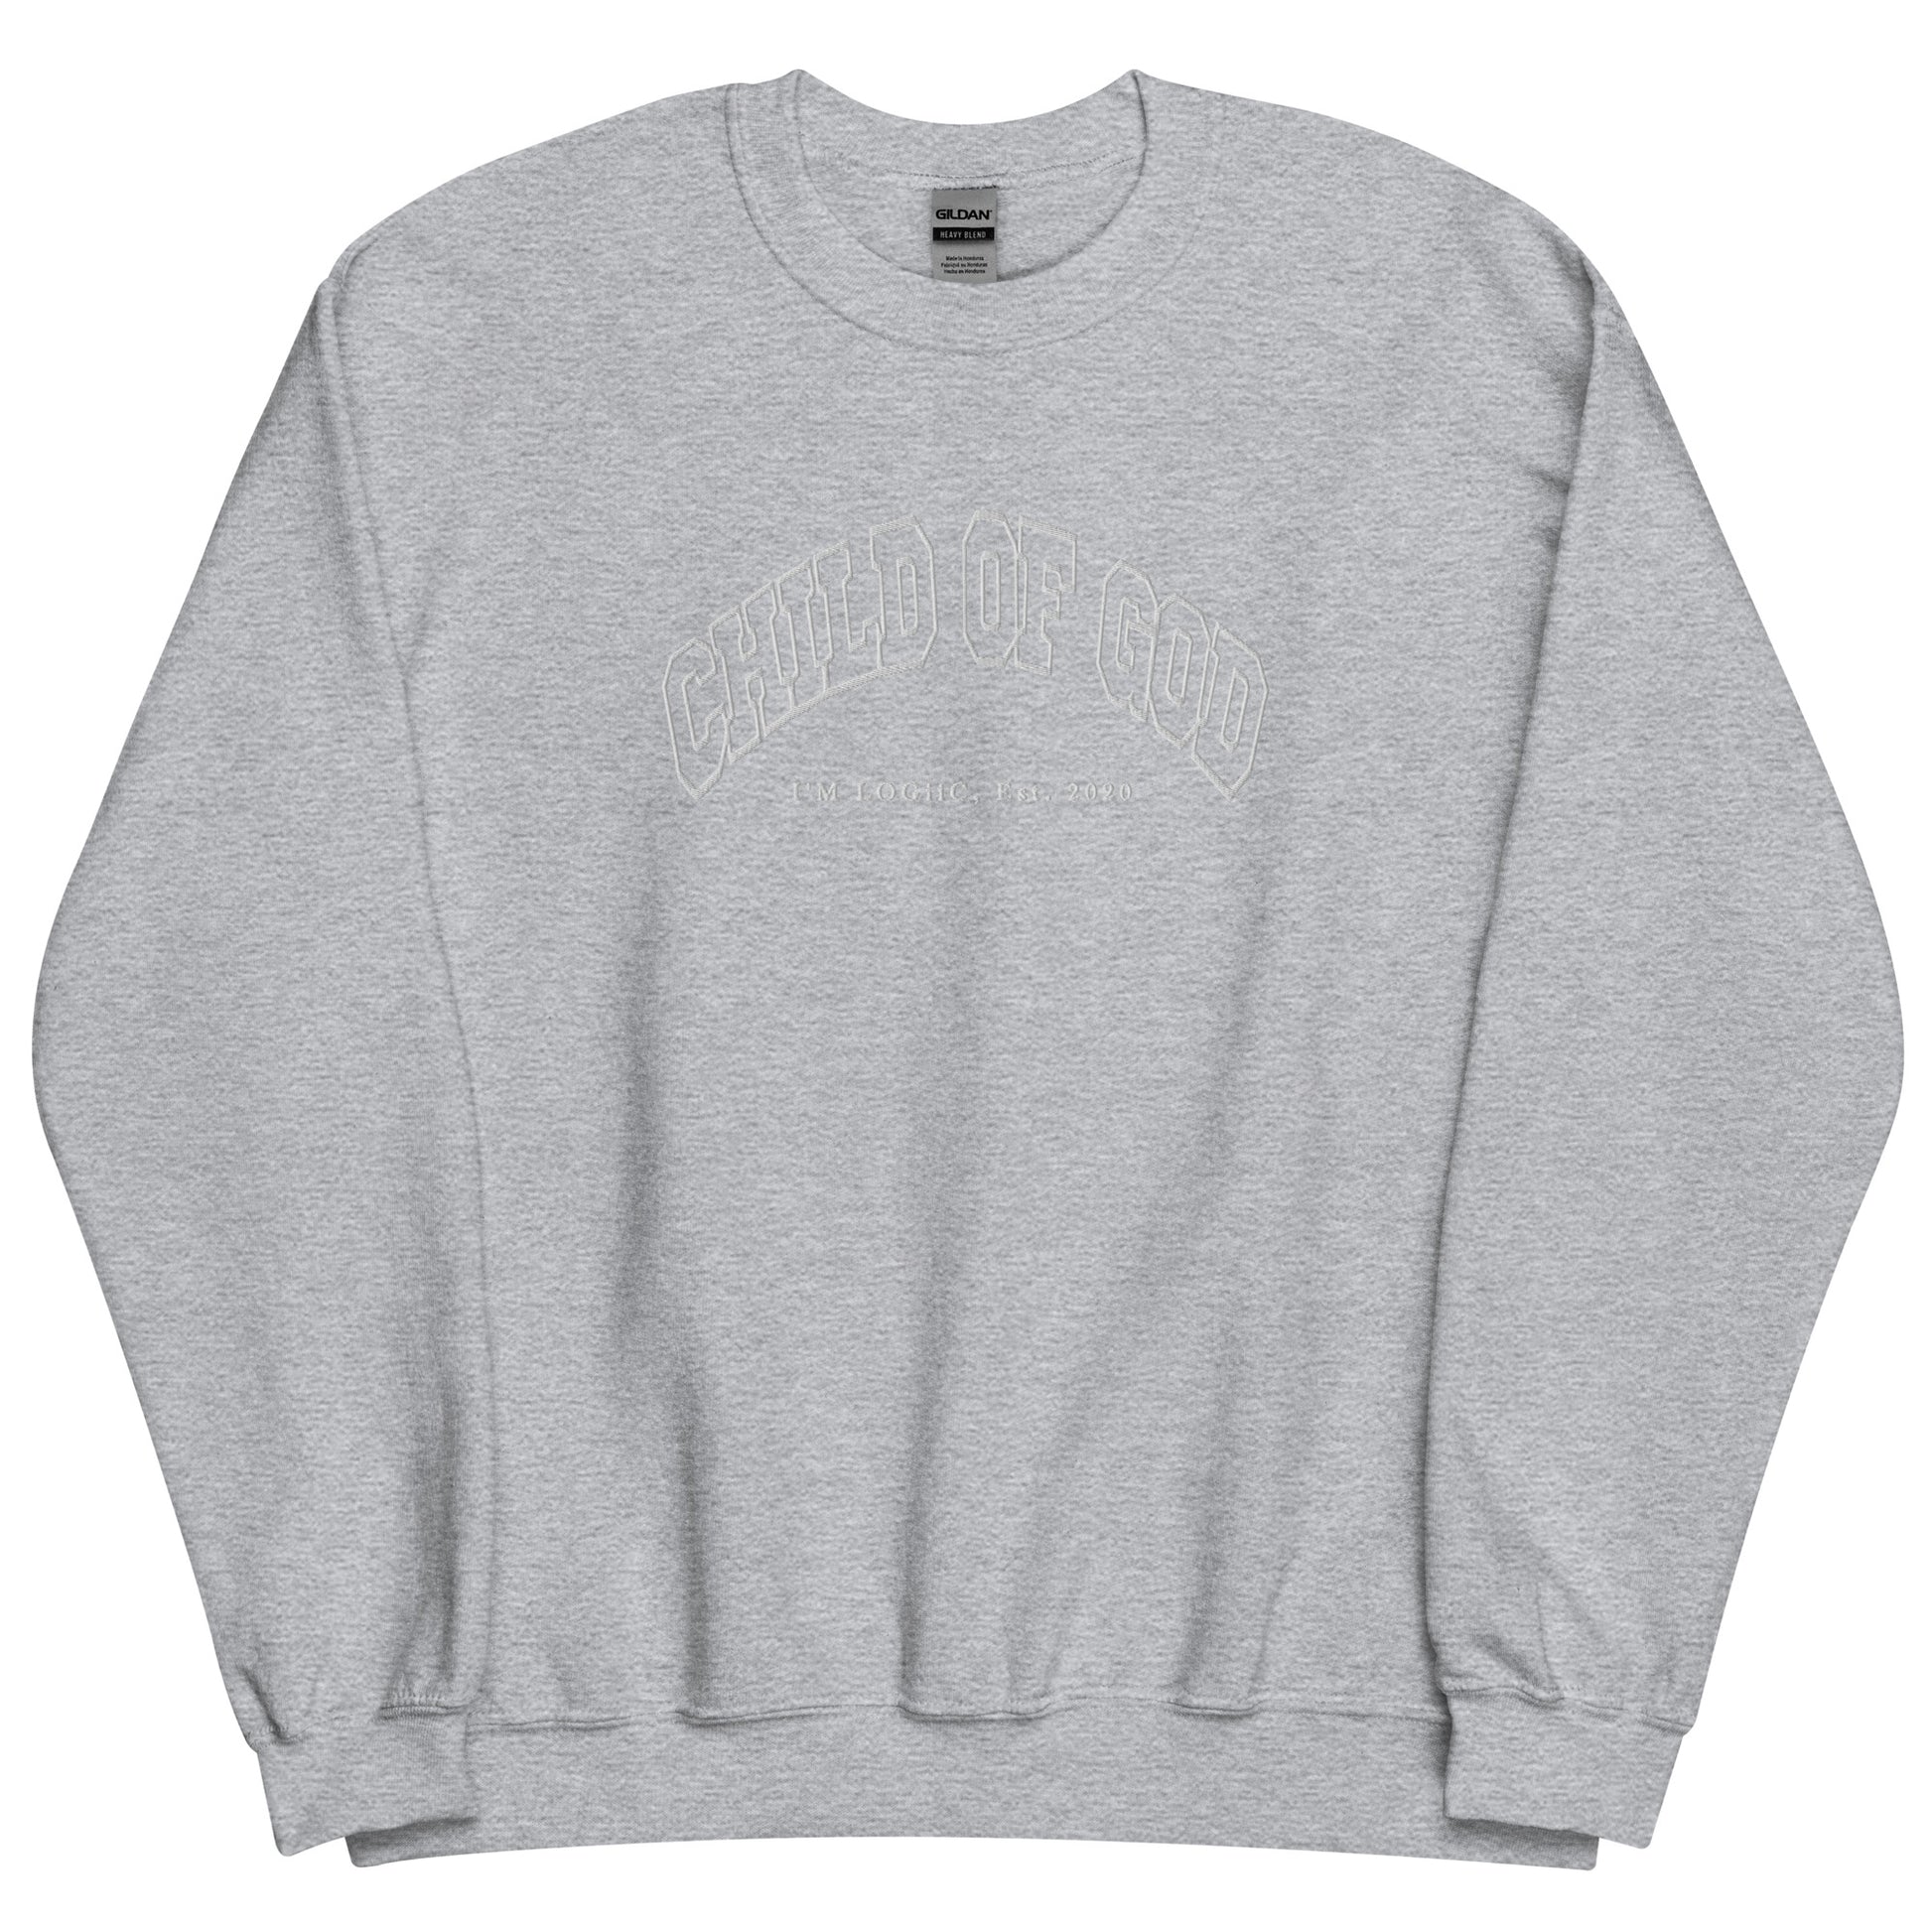 Child of God Unisex Sweatshirt - Sport Grey / S